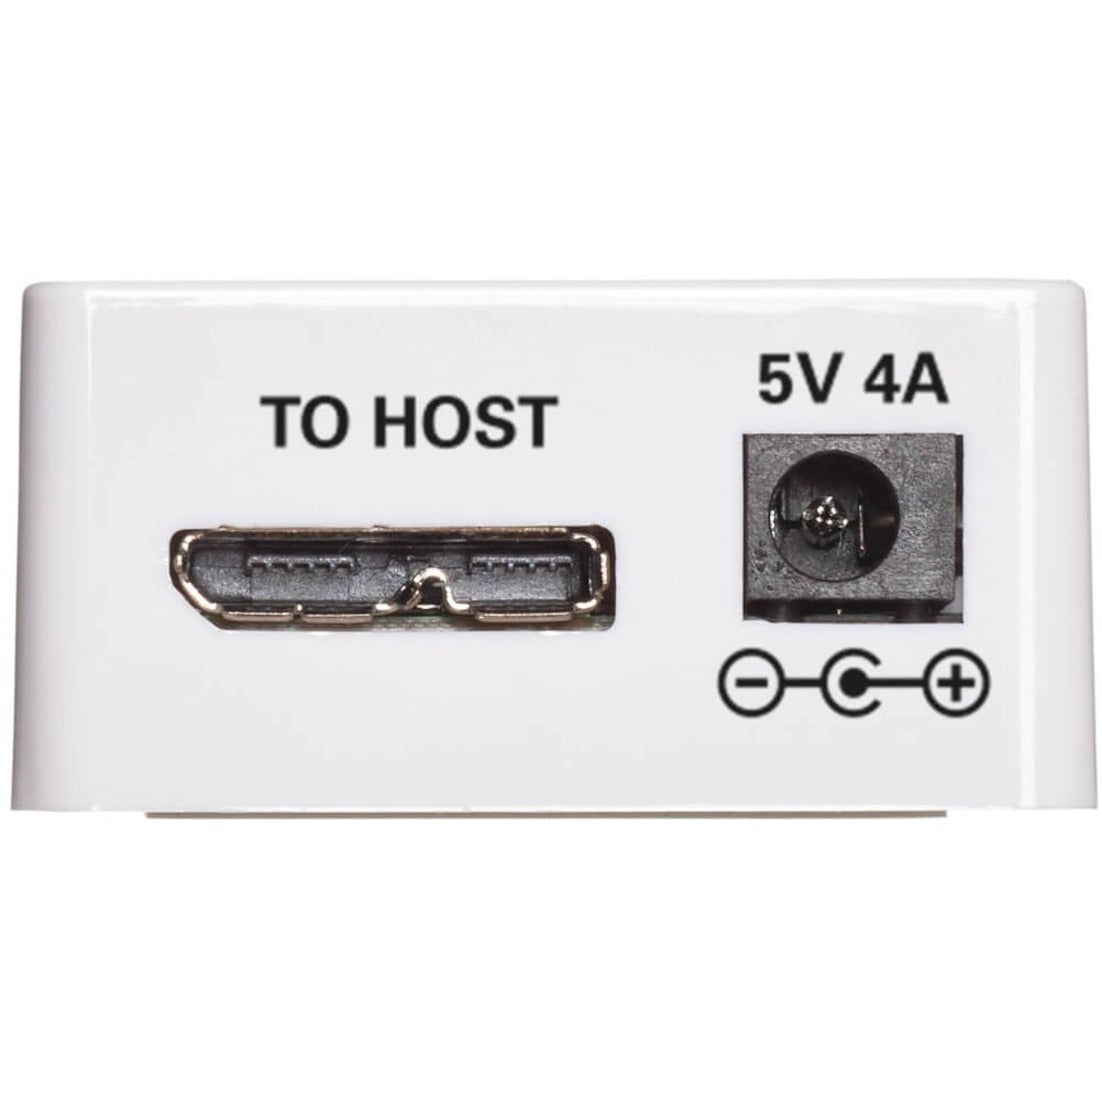 Tripp Lite U360-010C-2X3 10-Port USB Hub, 2 USB 3.0, 8 USB 2.0, White